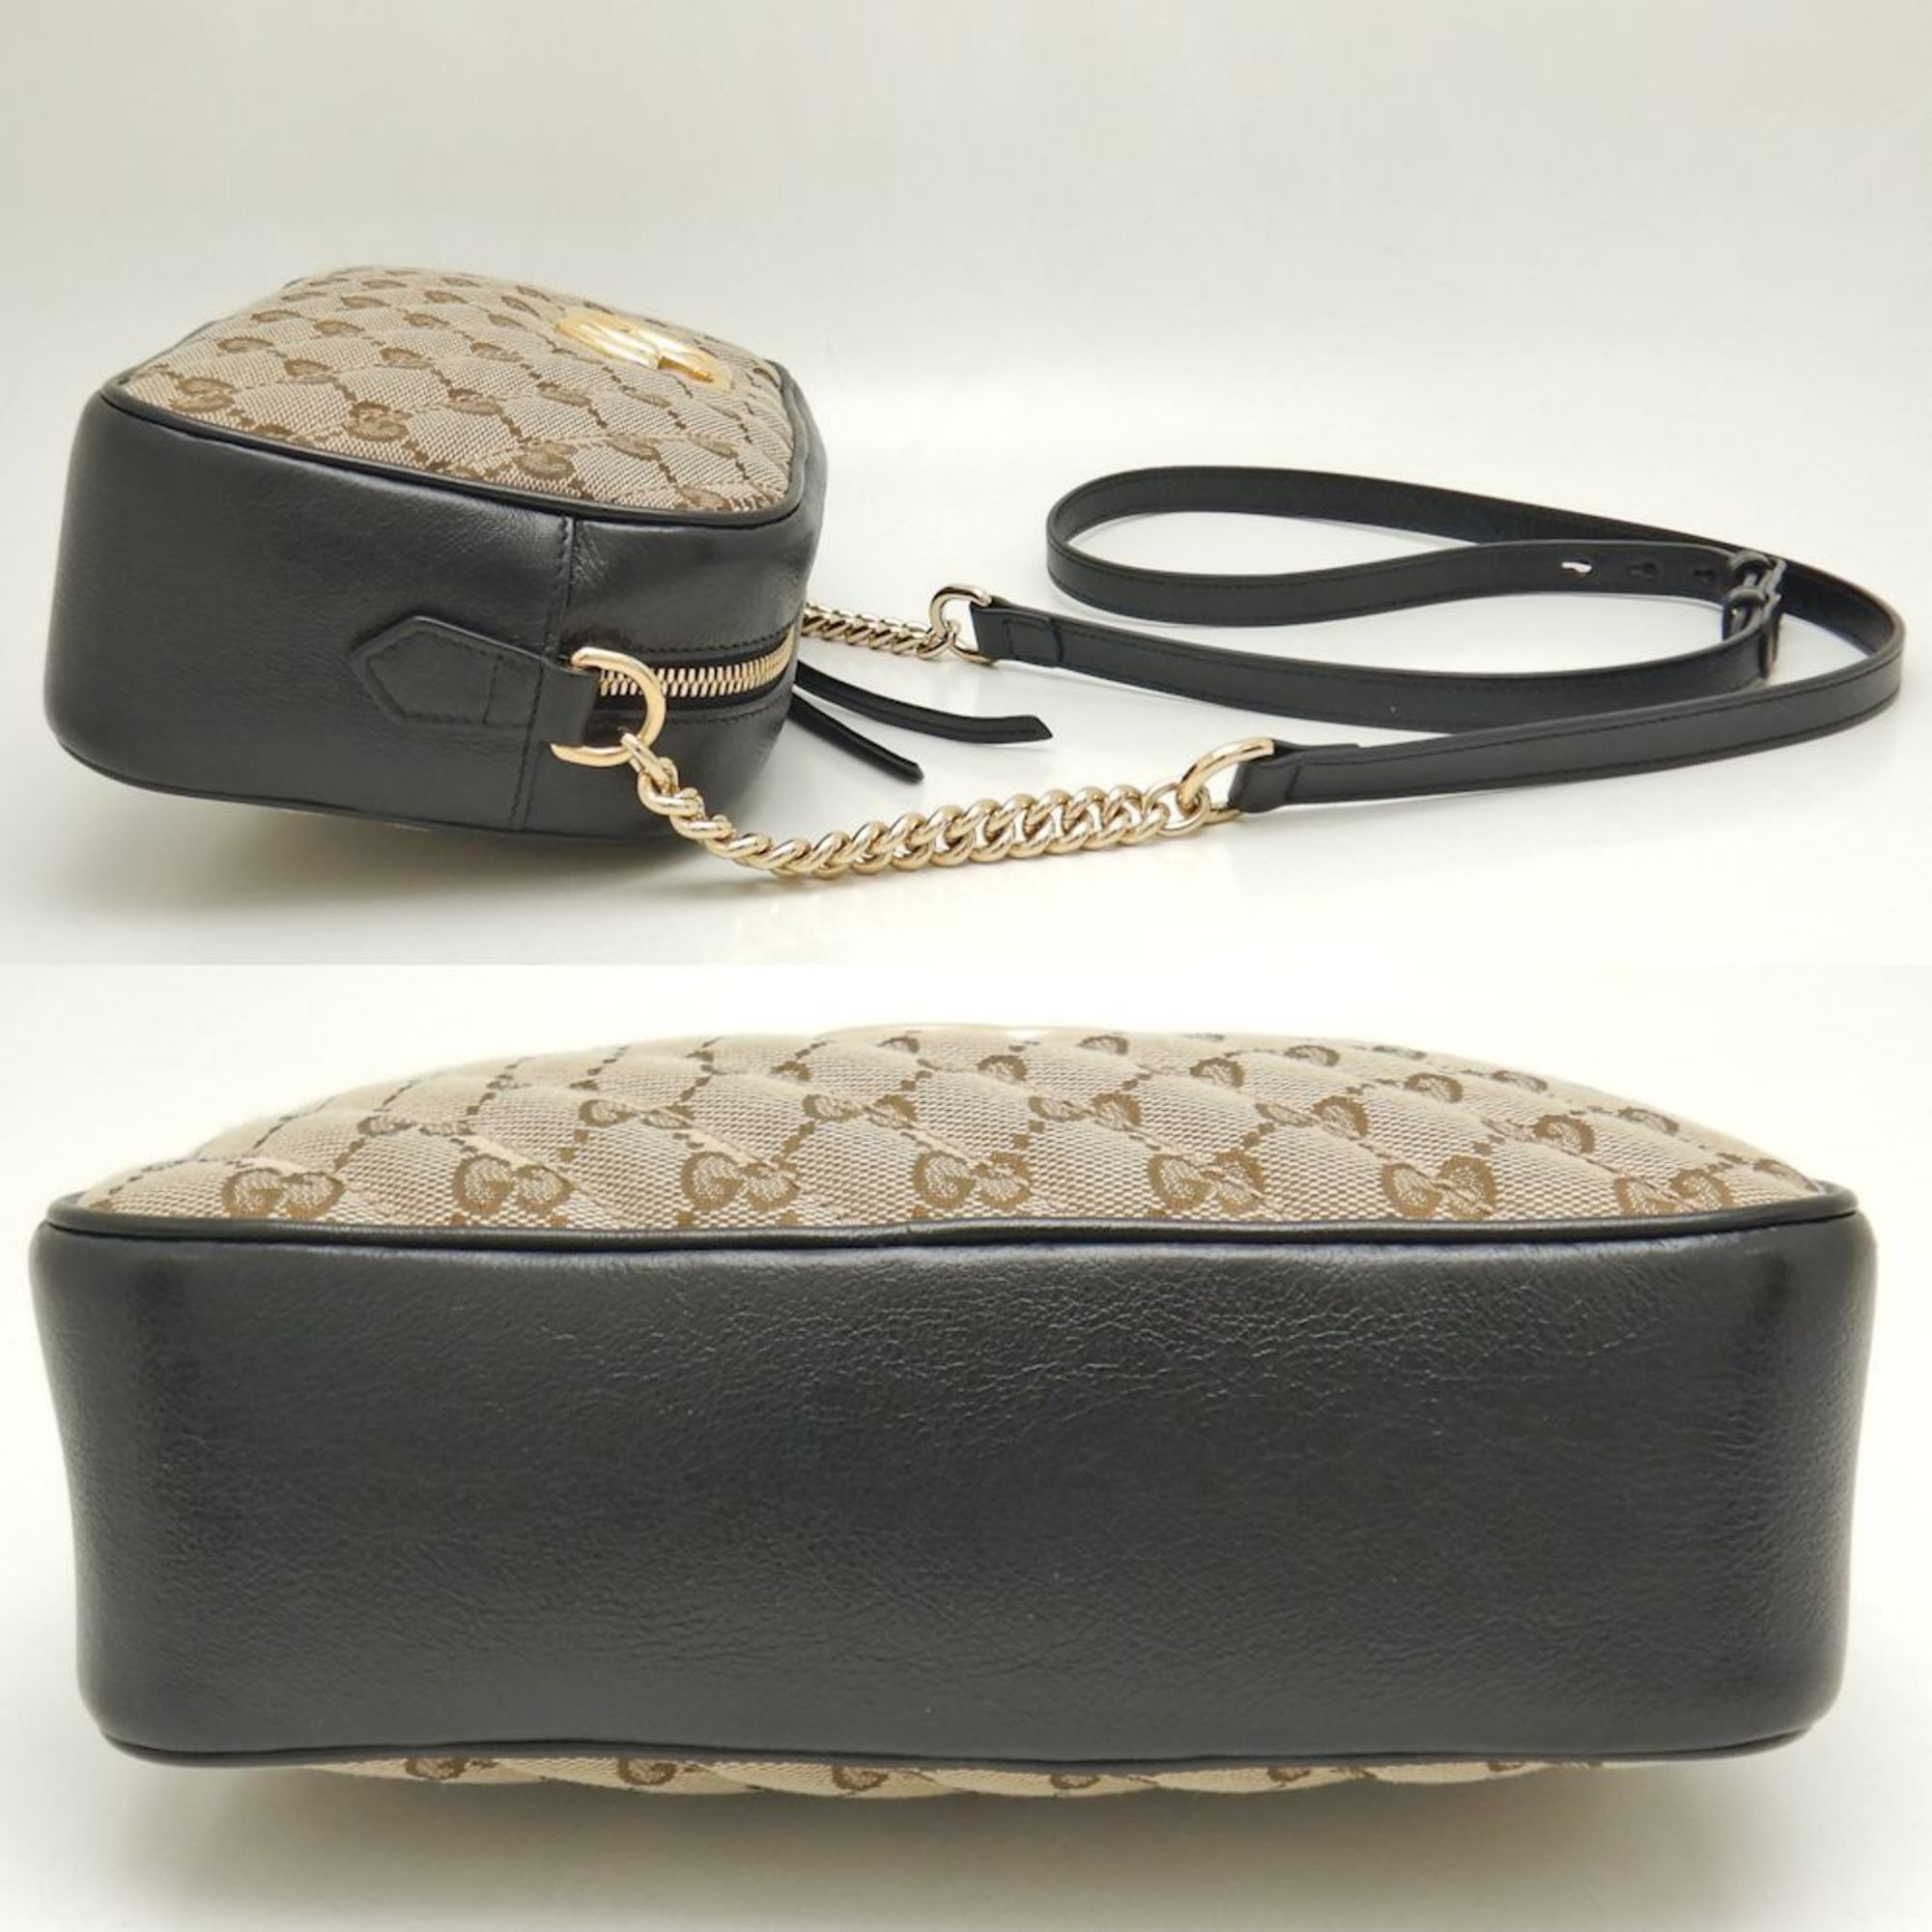 GUCCI Gucci Chain Shoulder Bag 447632 GG Marmont Canvas x Leather Beige Black 251623